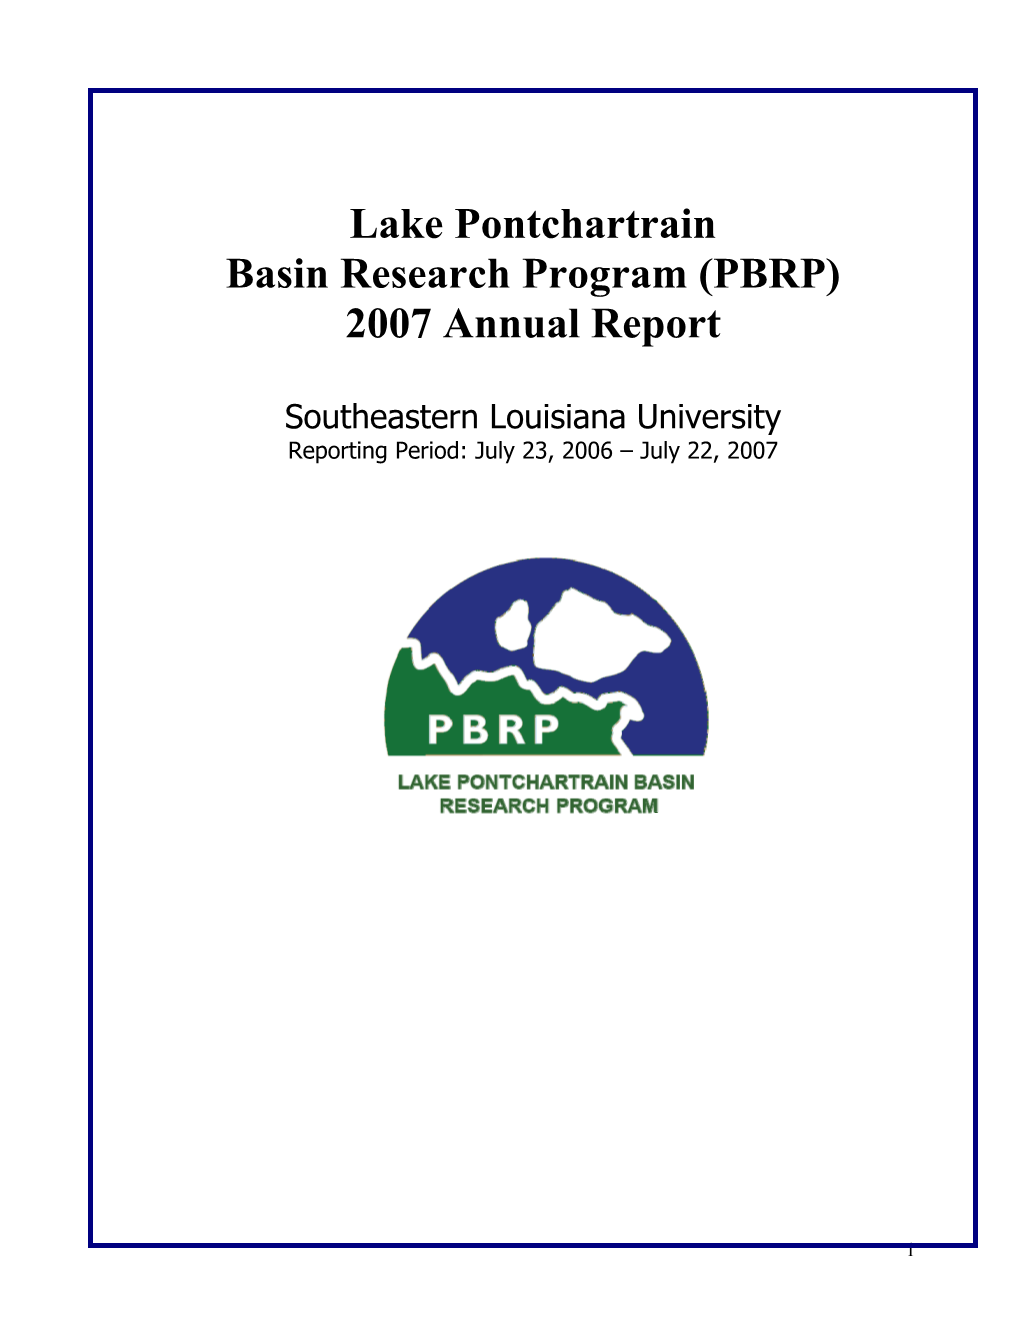 Lake Pontchartrain Basin Research Program (PBRP) 2007 Annual Report